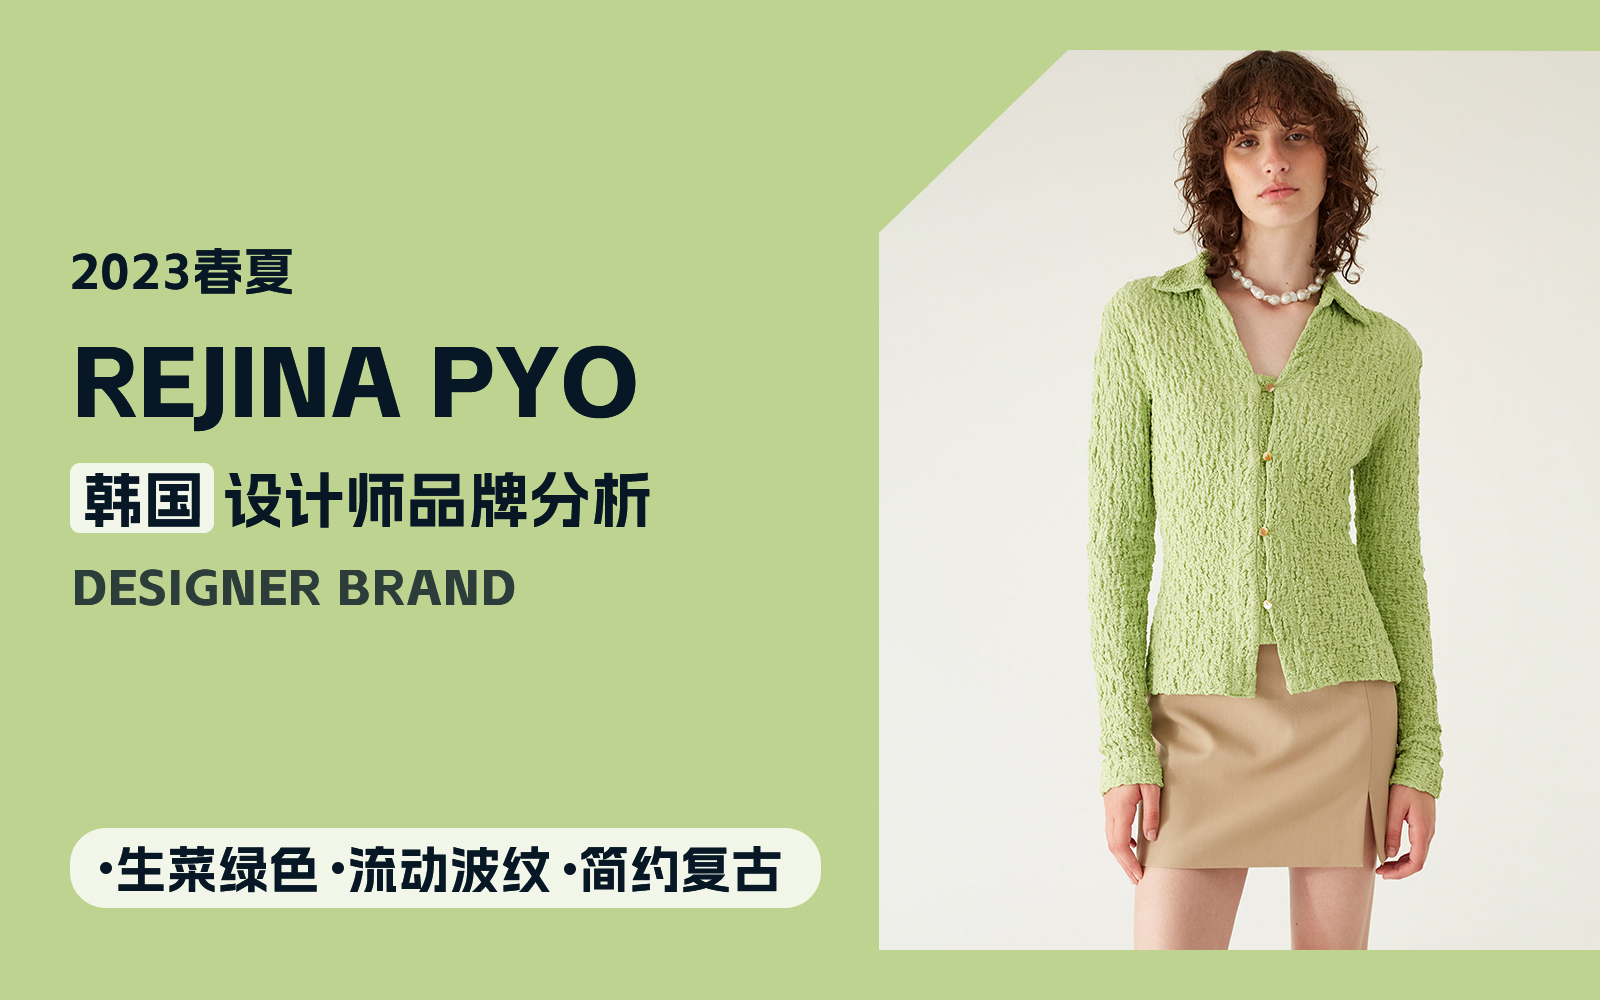 Minimalist Unisex -- The Analysis of Rejina Pyo The Womenswear Designer Brand